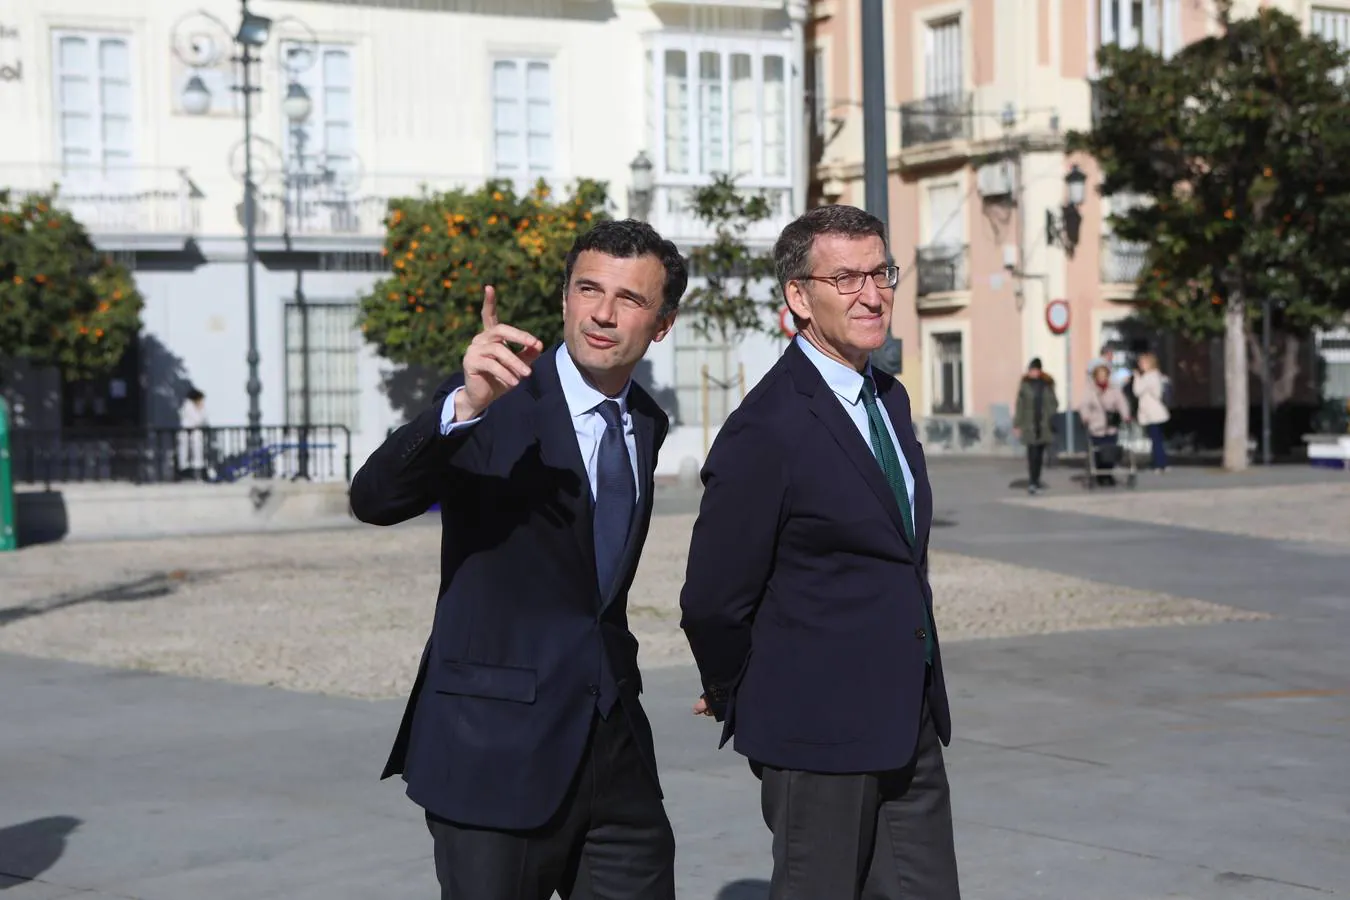 Fotos: Feijóo pasea por las calles de Cádiz junto a Bruno García, candidato del PP por Cádiz